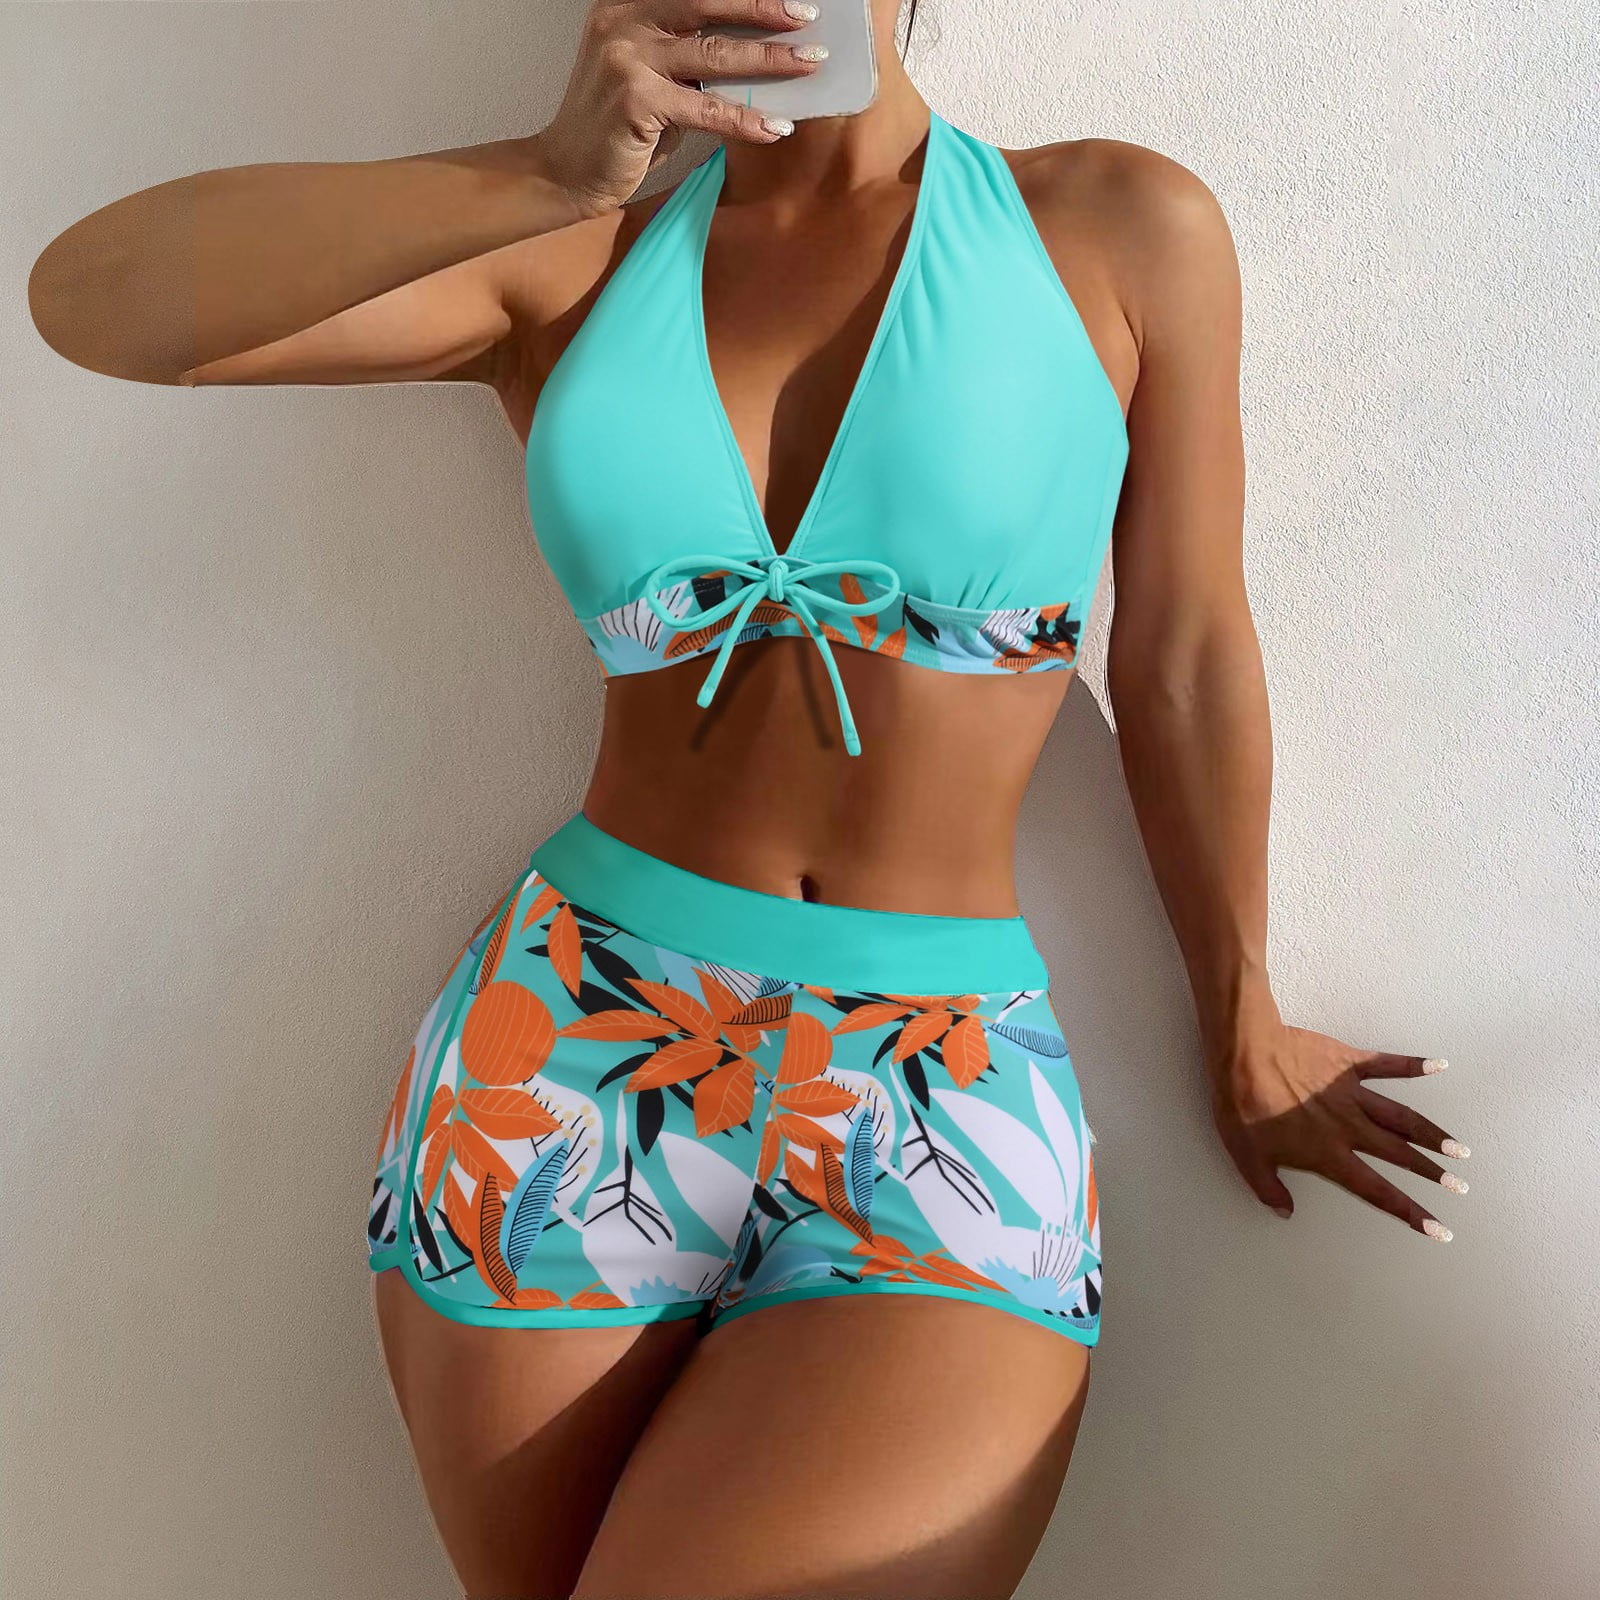 Gubotare Bikini Sets For Women Women's Ditsy Floral Printed